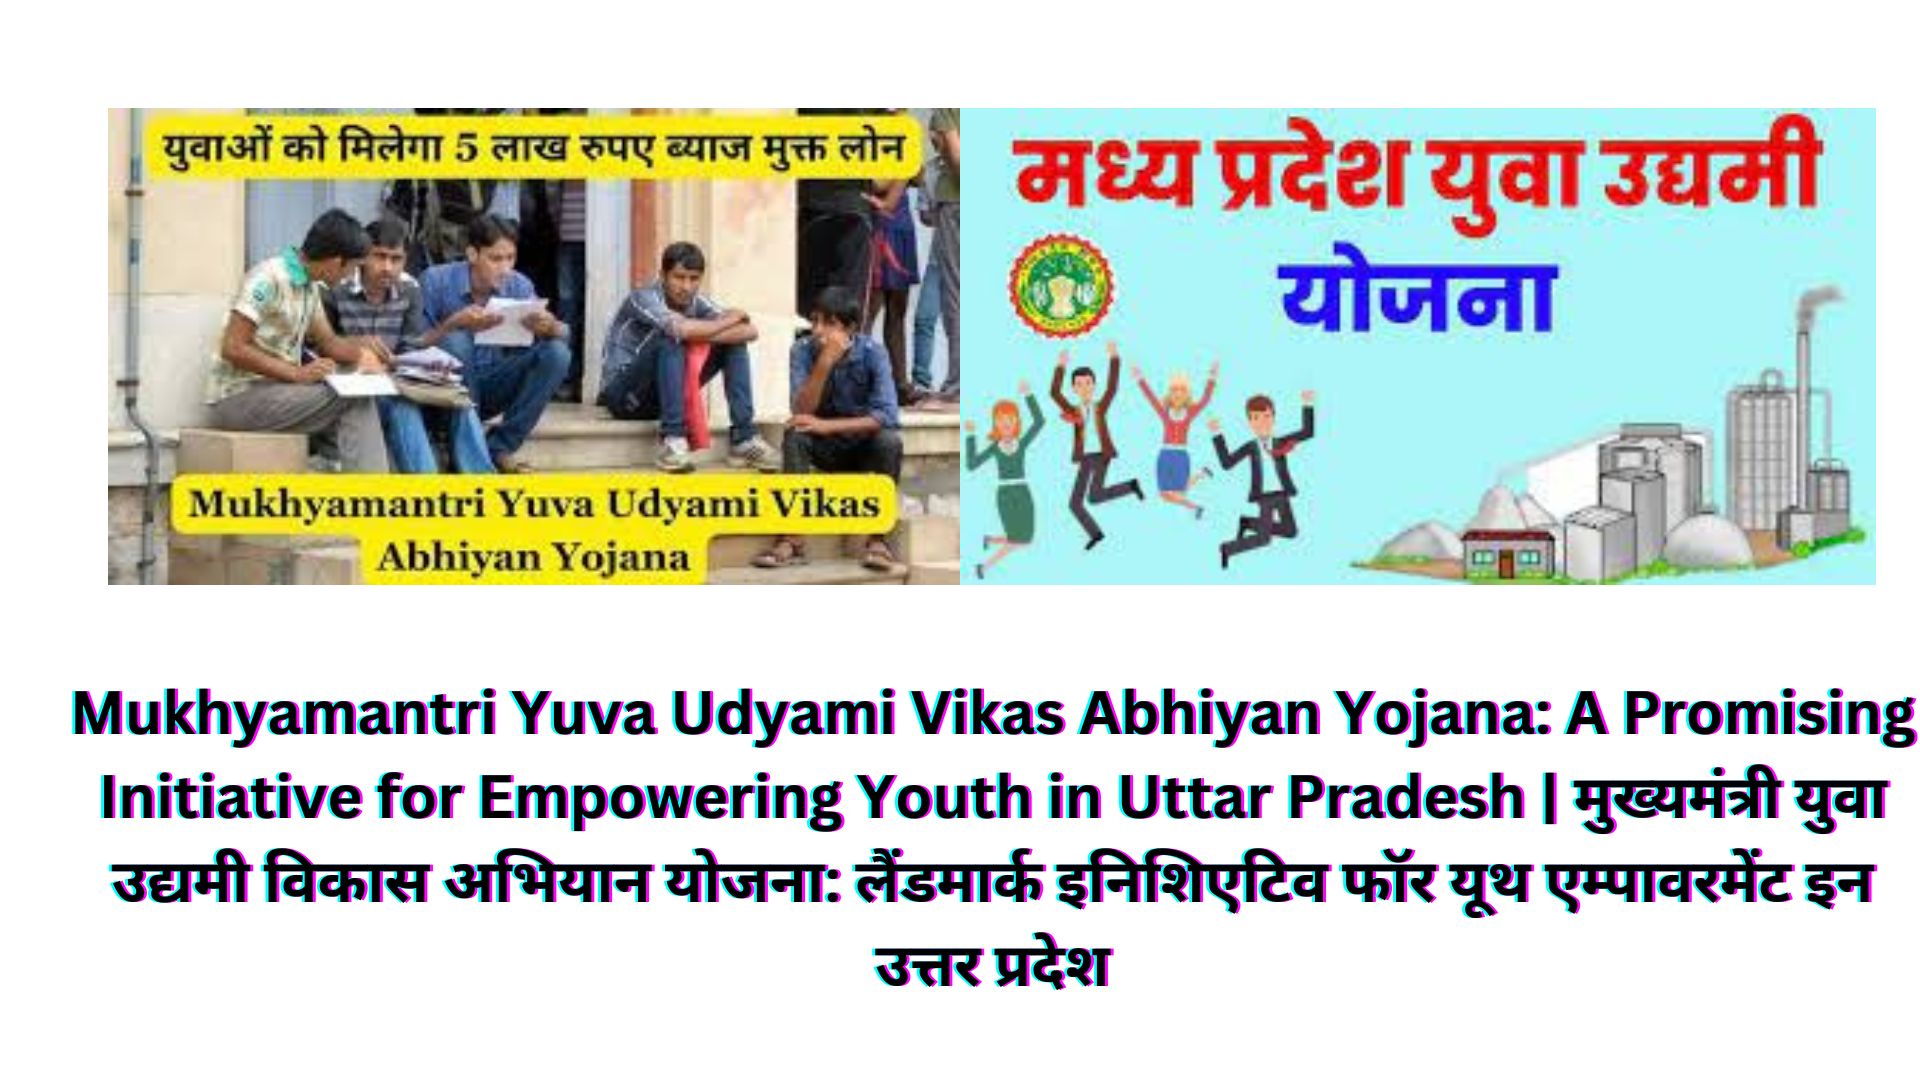 Mukhyamantri Yuva Udyami Vikas Abhiyan Yojana: A Promising Initiative for Empowering Youth in Uttar Pradesh | मुख्यमंत्री युवा उद्यमी विकास अभियान योजना: ा लैंडमार्क इनिशिएटिव फॉर यूथ एम्पावरमेंट इन उत्तर प्रदेश